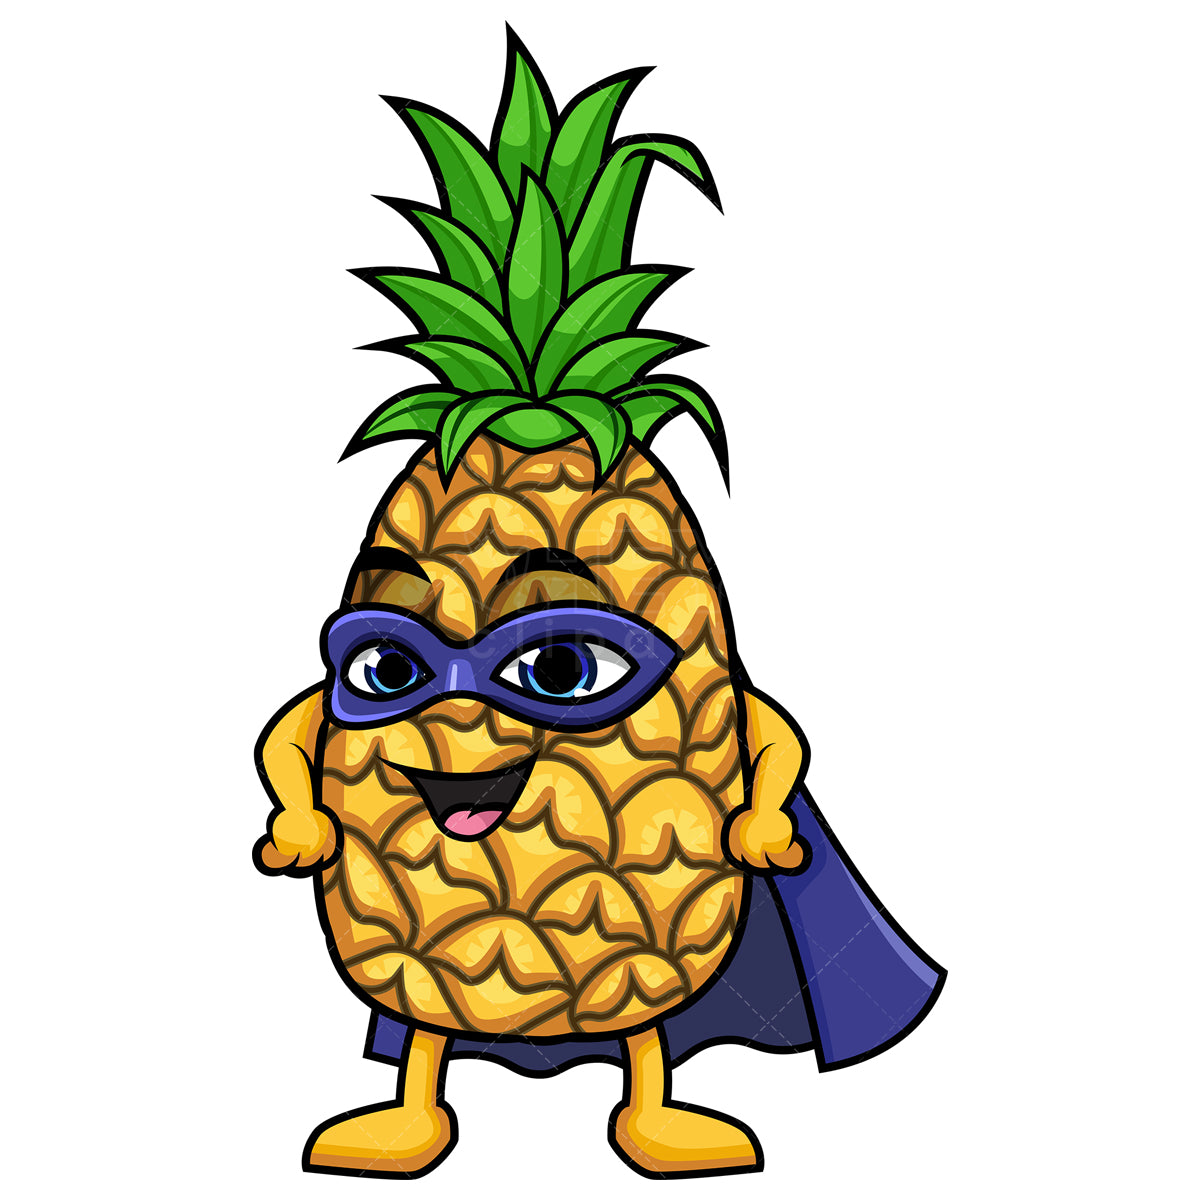 Royalty-free stock vector illustration of a pineapple superhero.